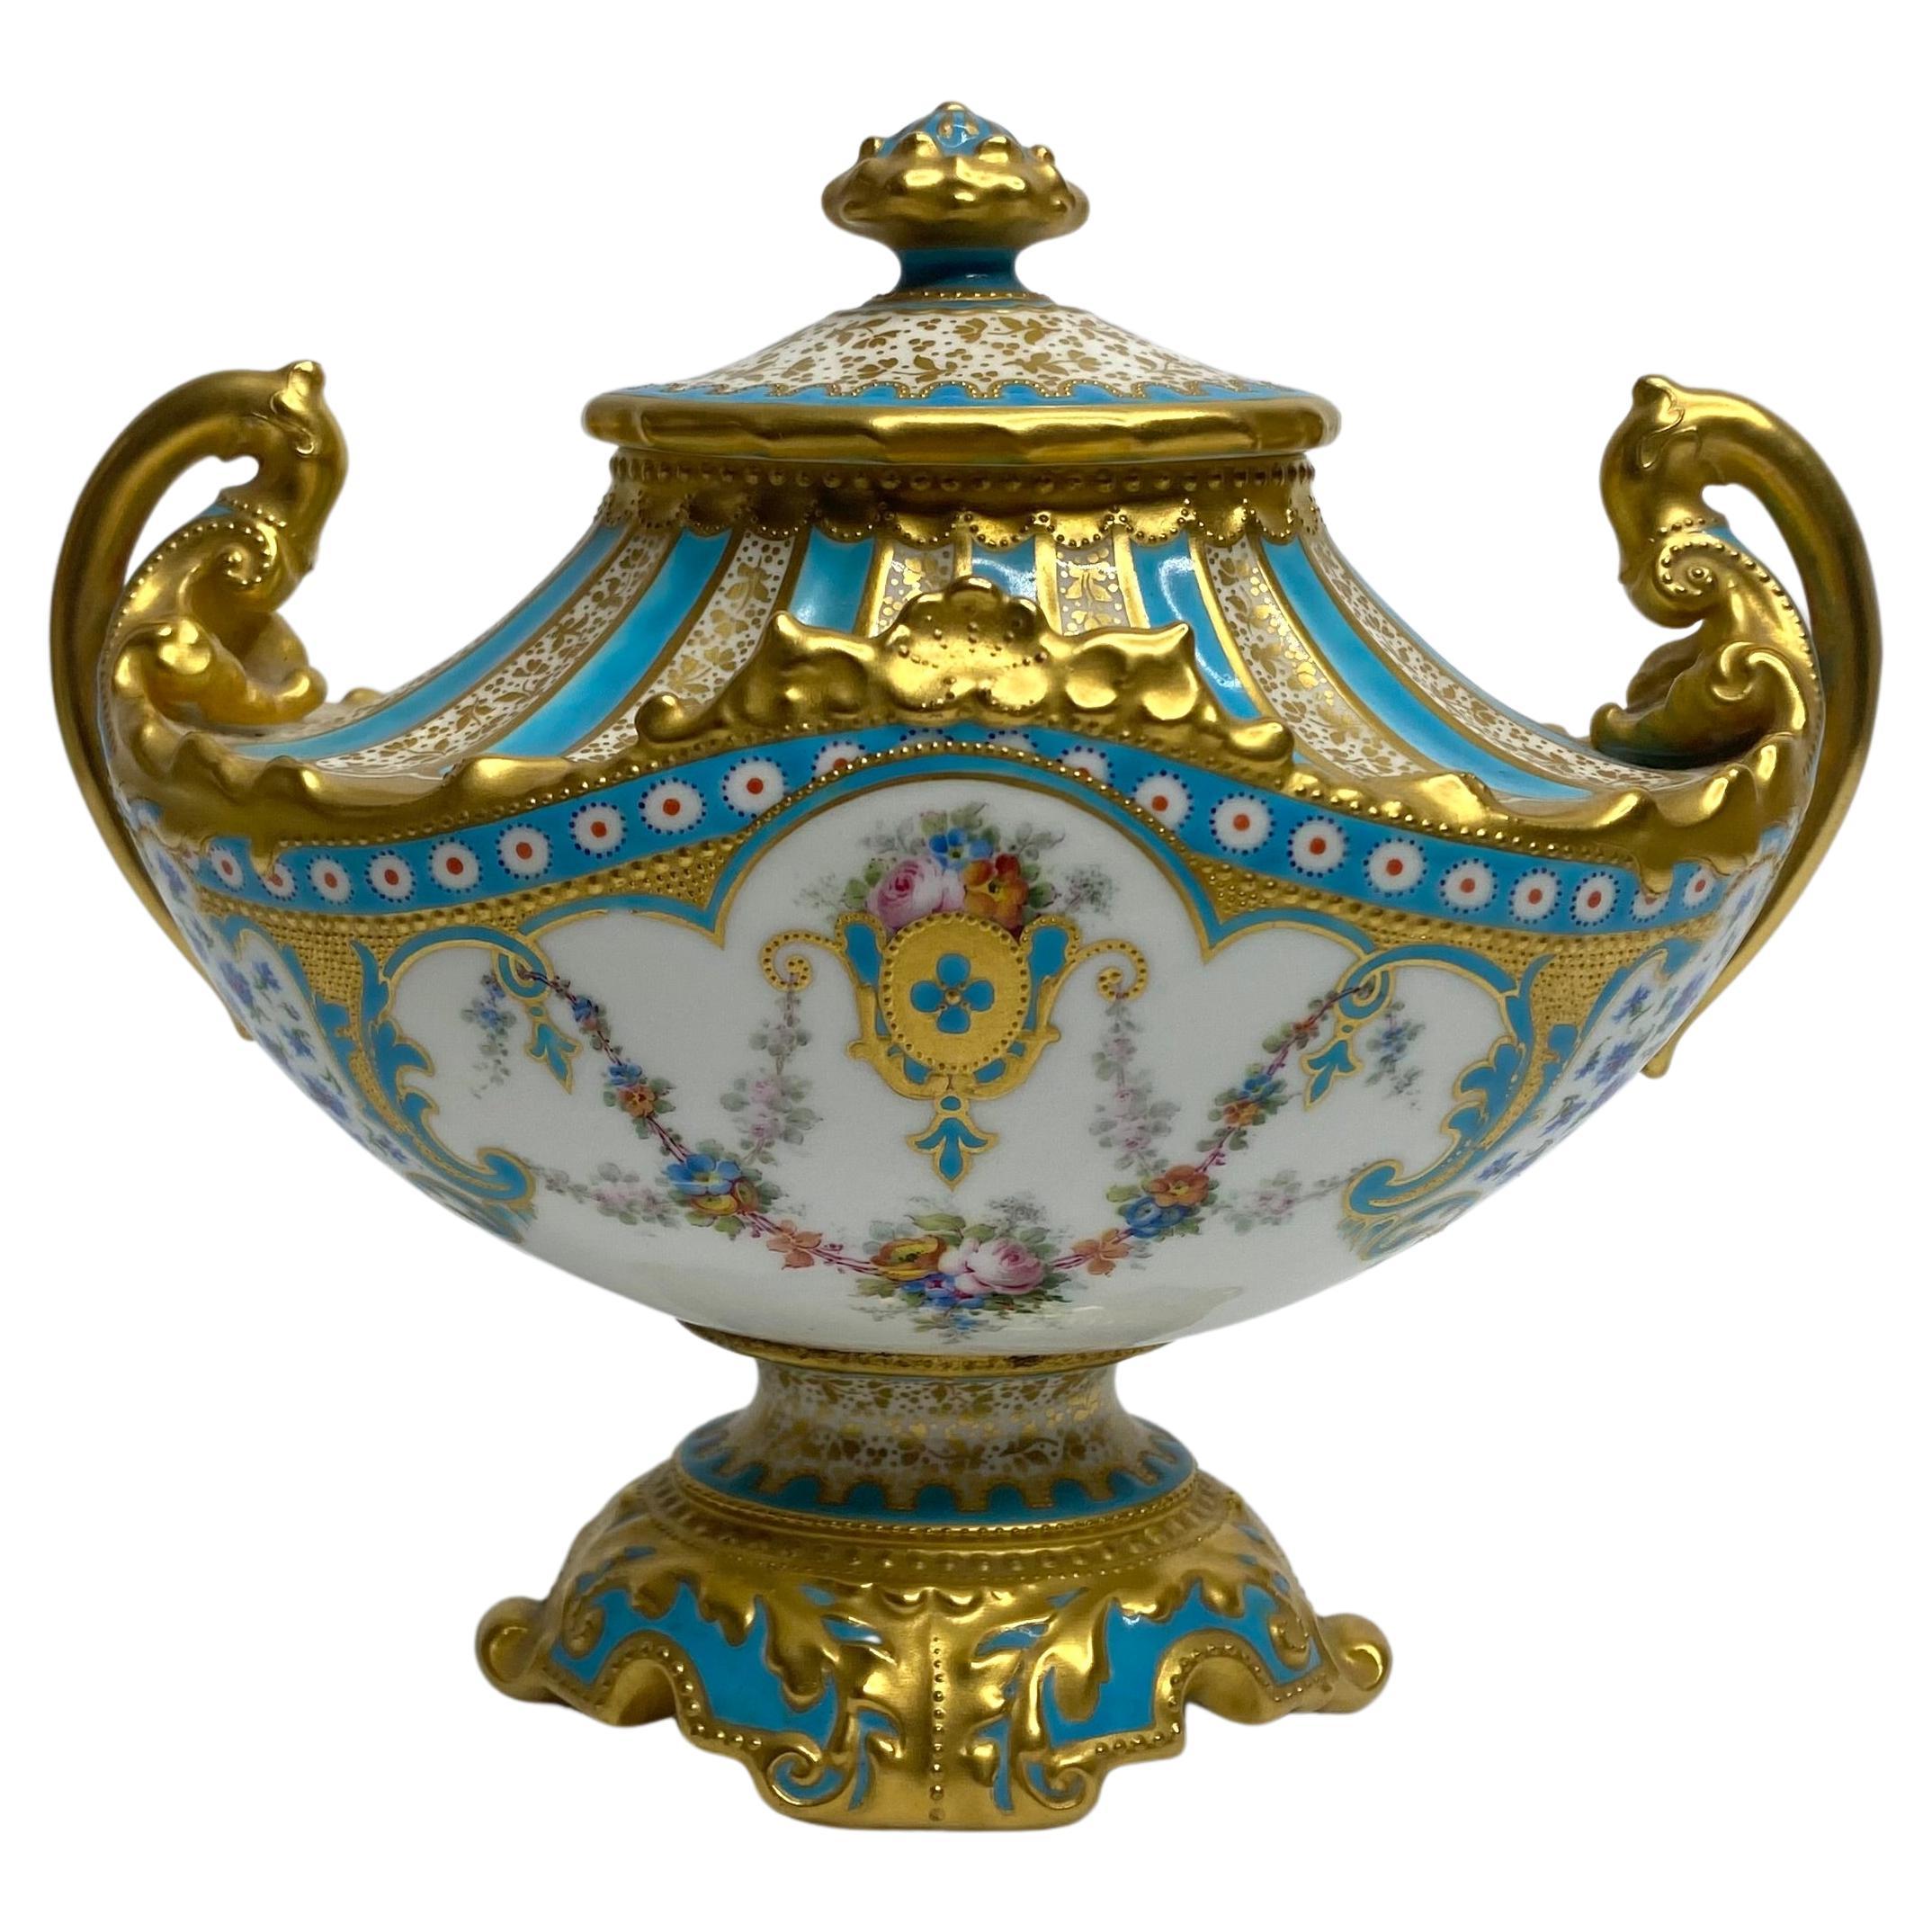 Royal Crown Derby porcelain vase and cover. Desire Leroy, d. 1897. For Sale